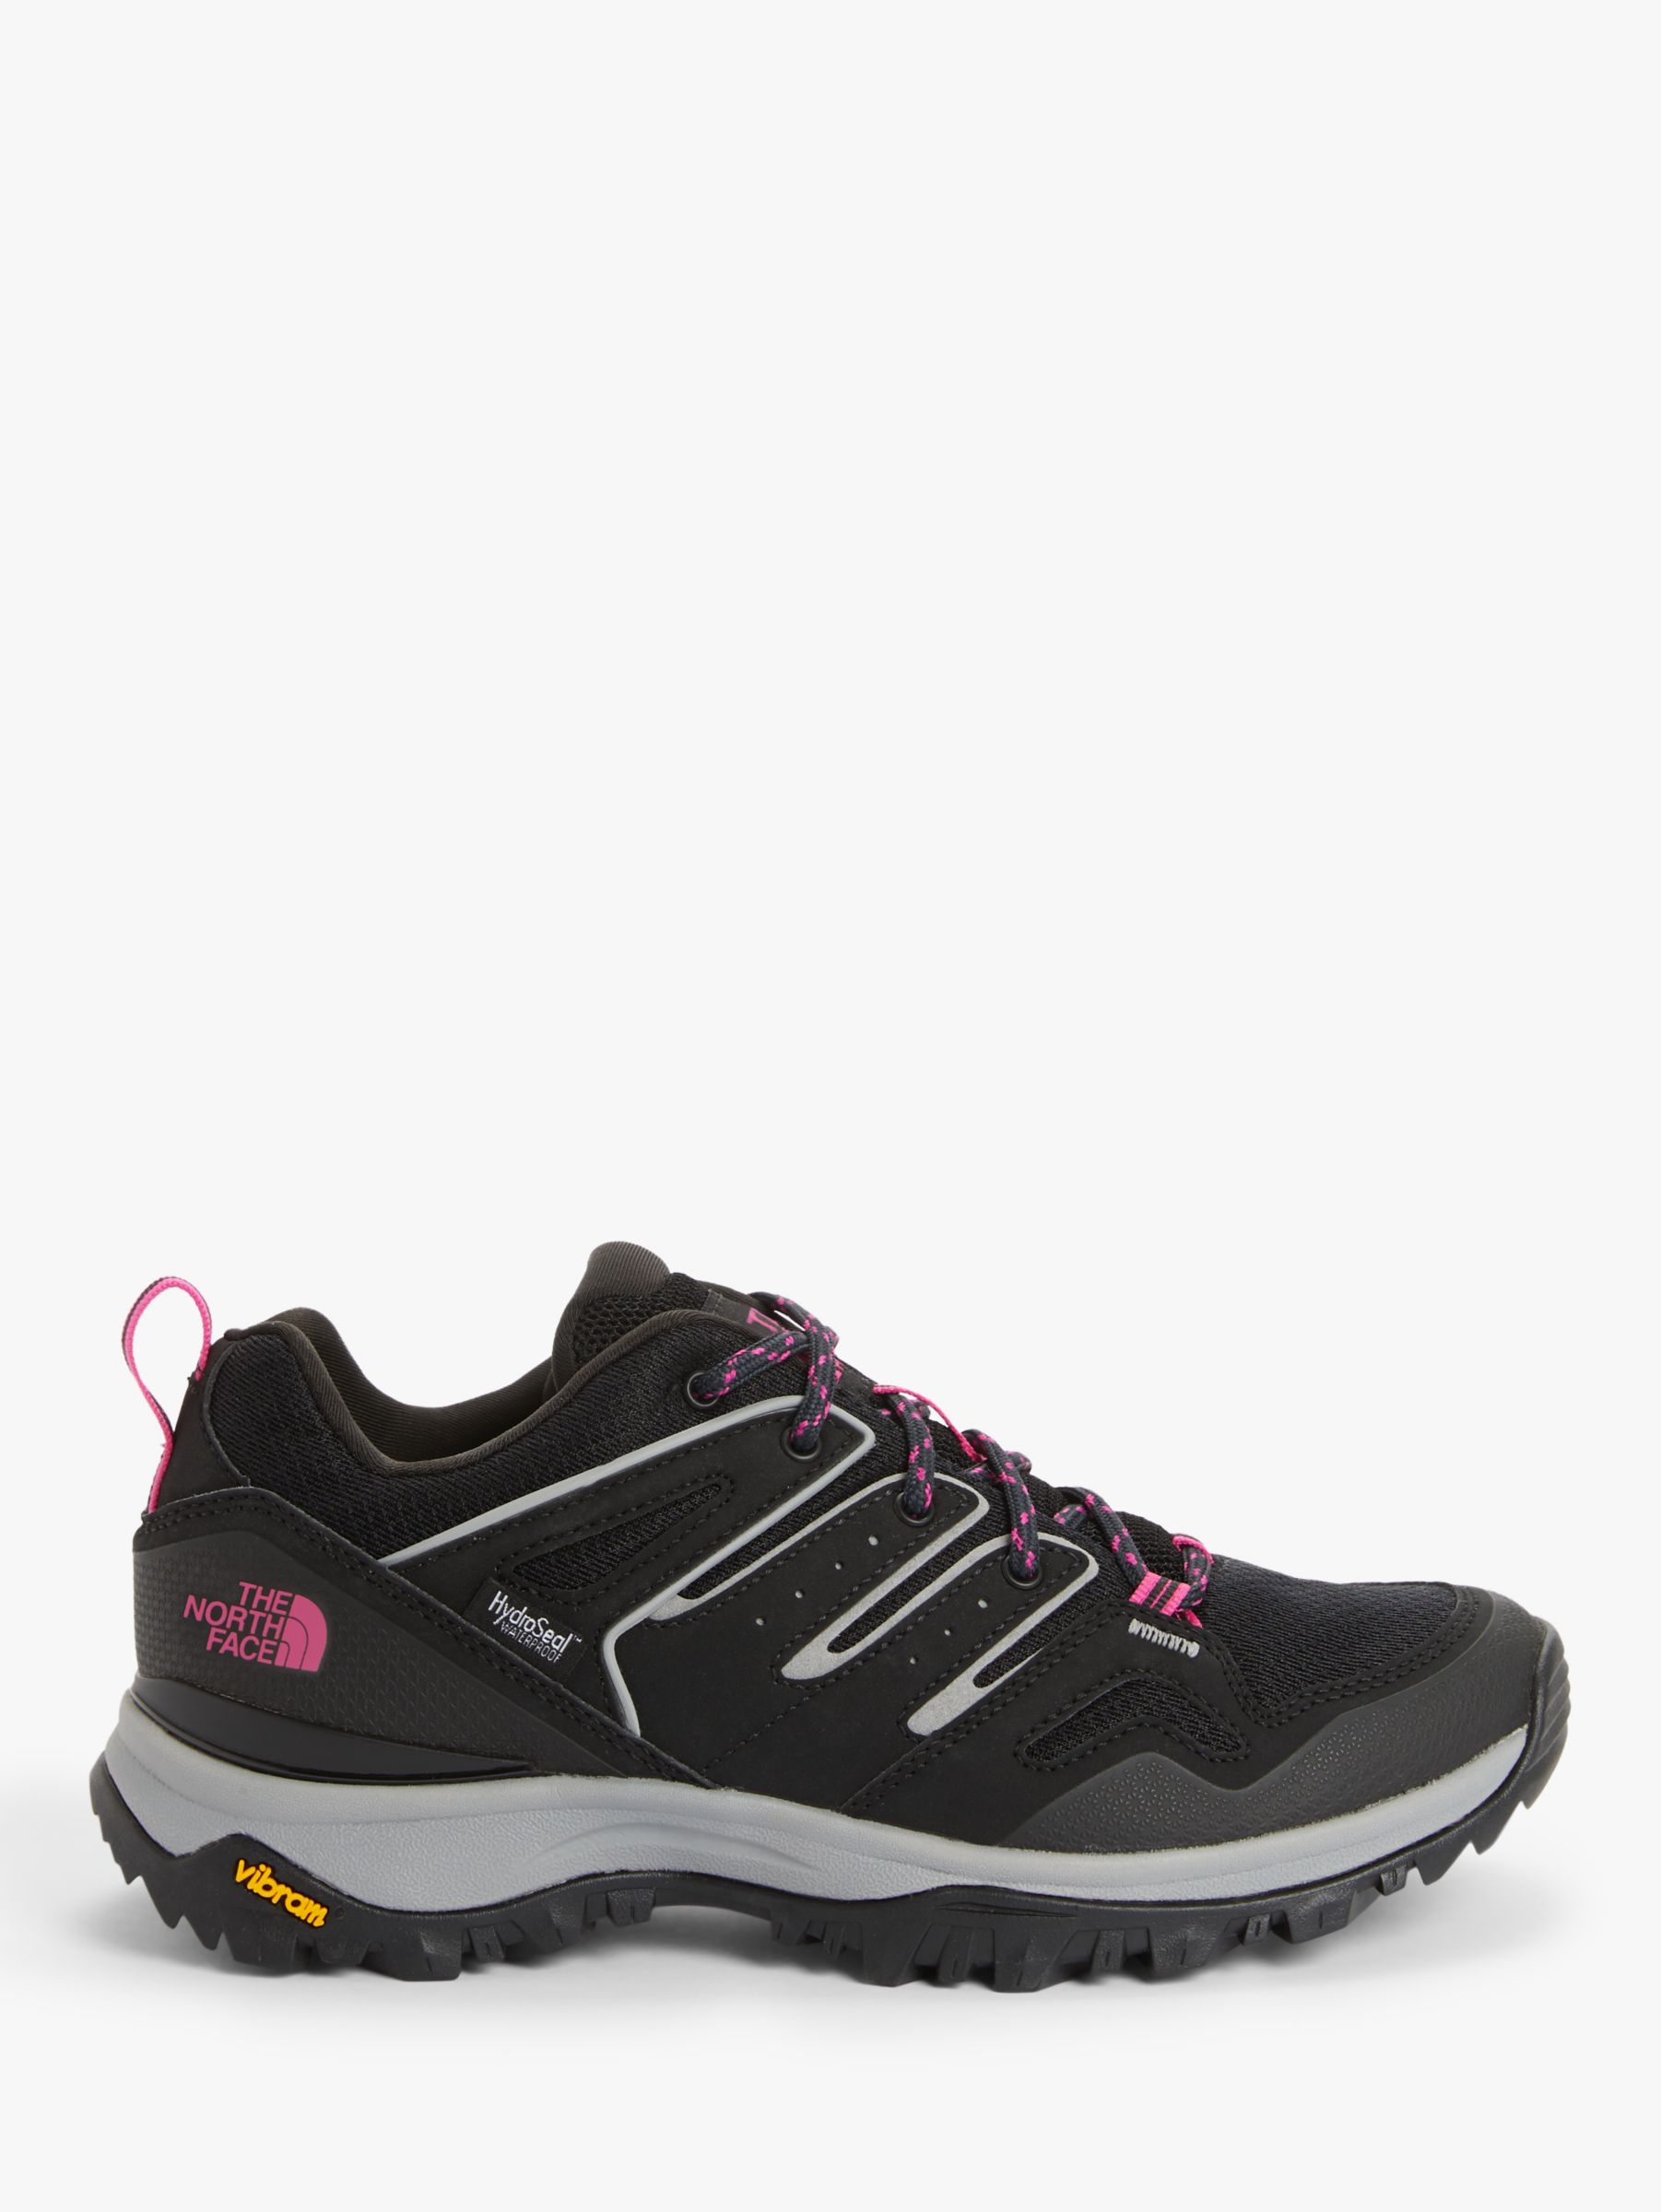 The North Face Hedgehog Fastpack II Women's Waterproof Hiking Shoes, TNF Black/Mr. Pink